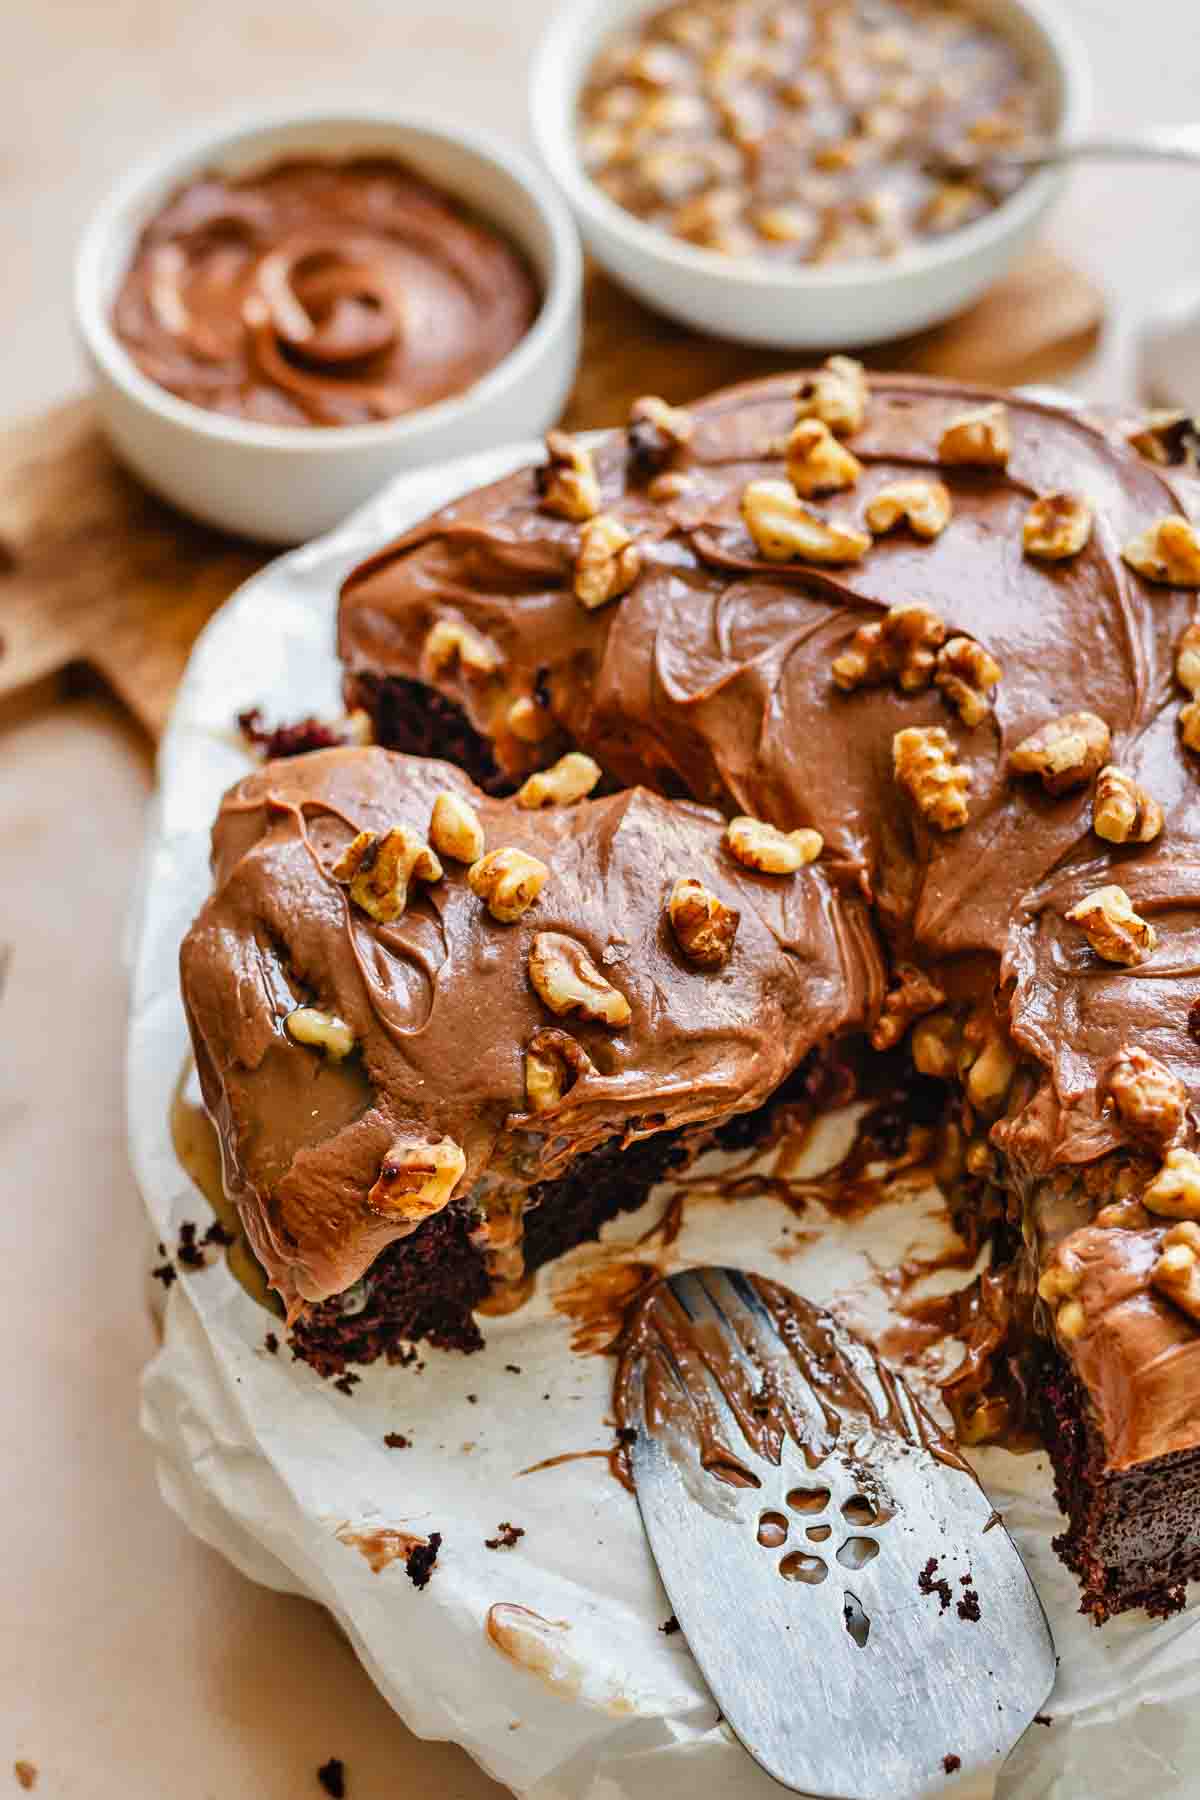 Sliced chocolate walnut cake on a platter.